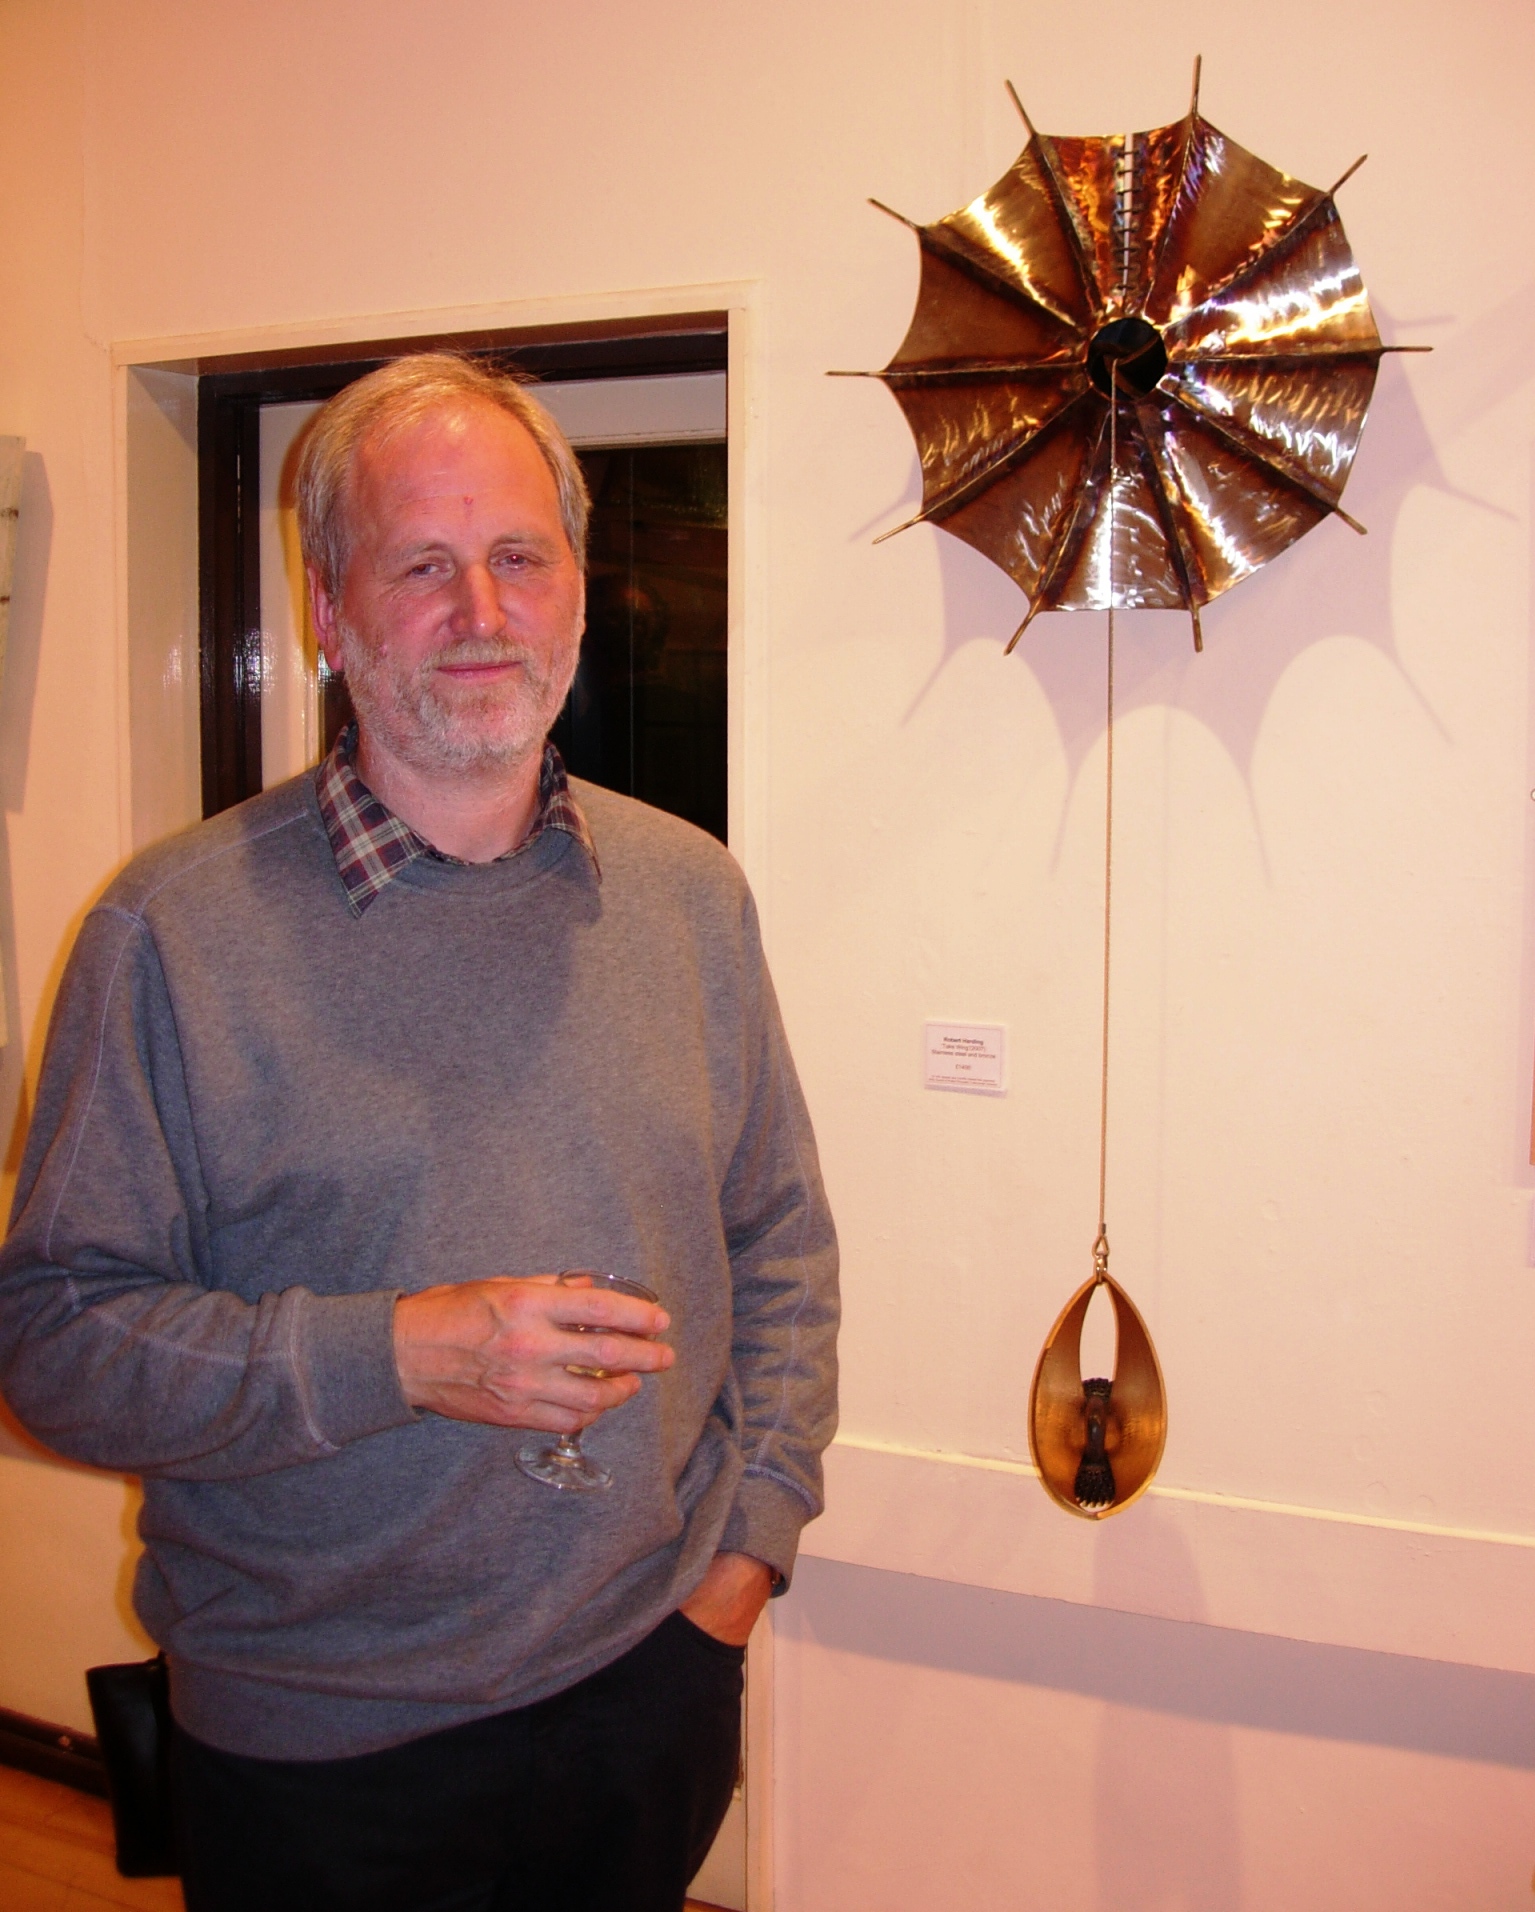 Robert Harding with one of his sculptures, Trehafod, 27 September 2007